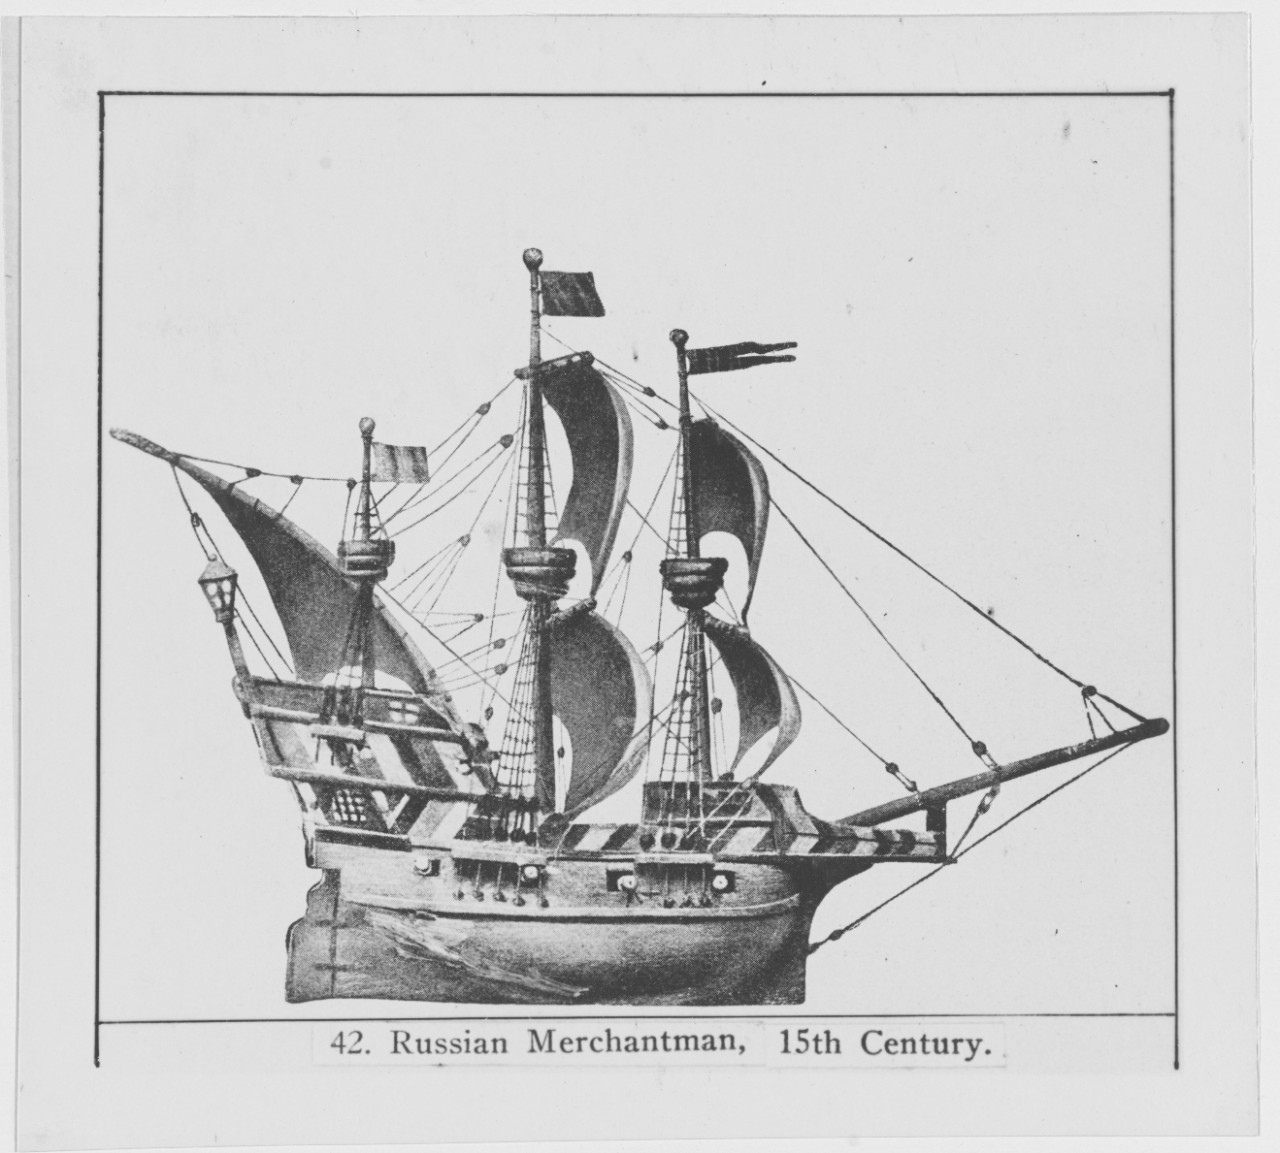 Model of Russian Merchantman, 15th Century